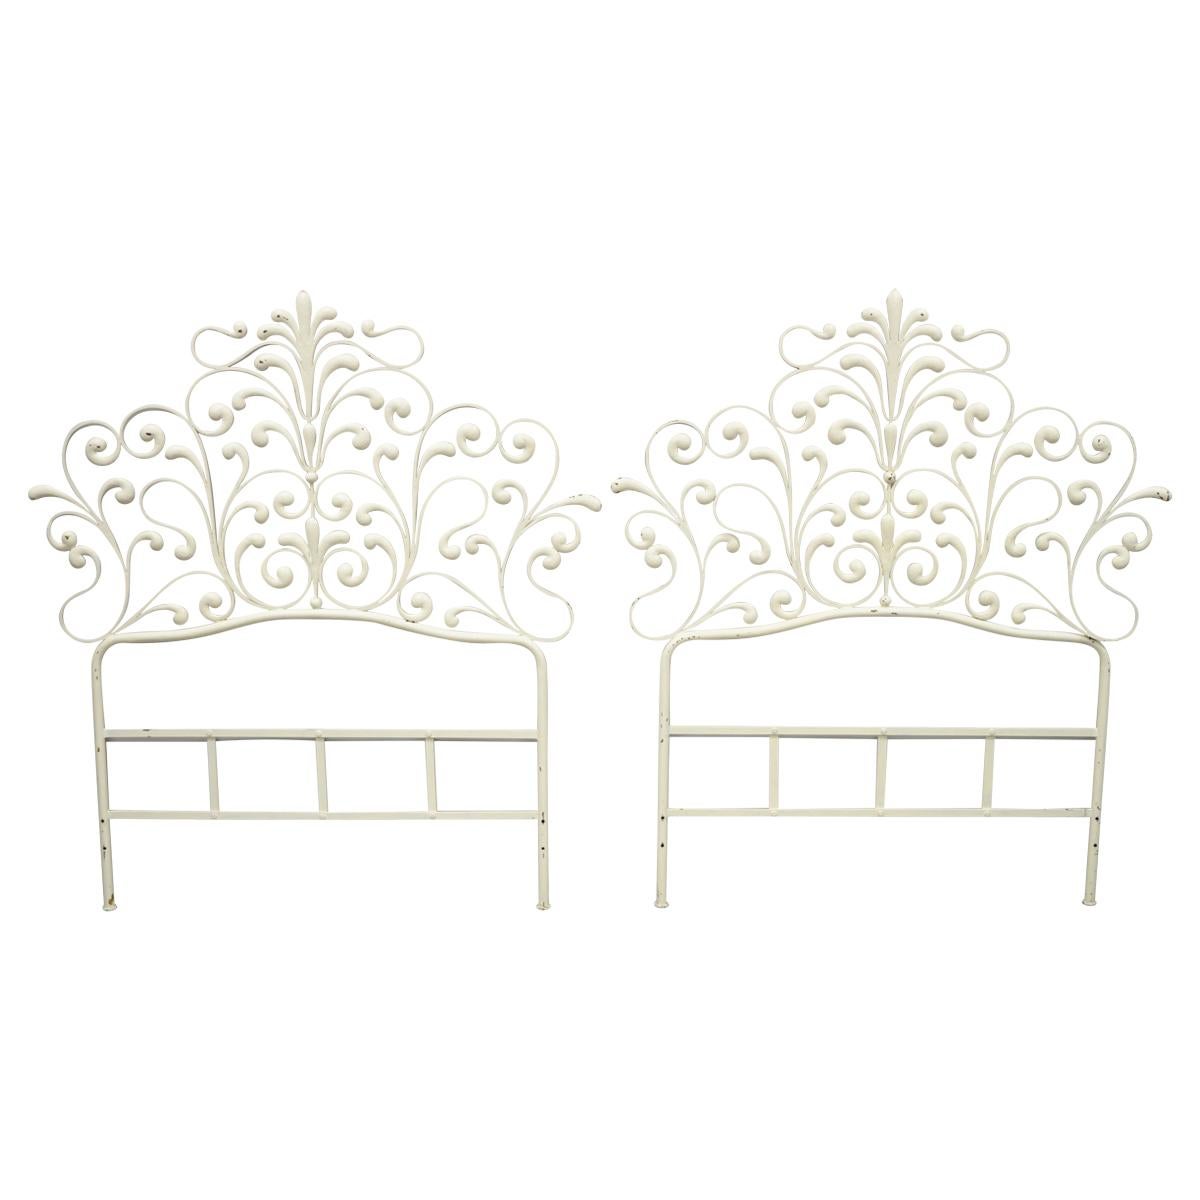 Pair of Vintage Italian Rococo Hollywood Regency Ornate Iron Twin Bed Headboard